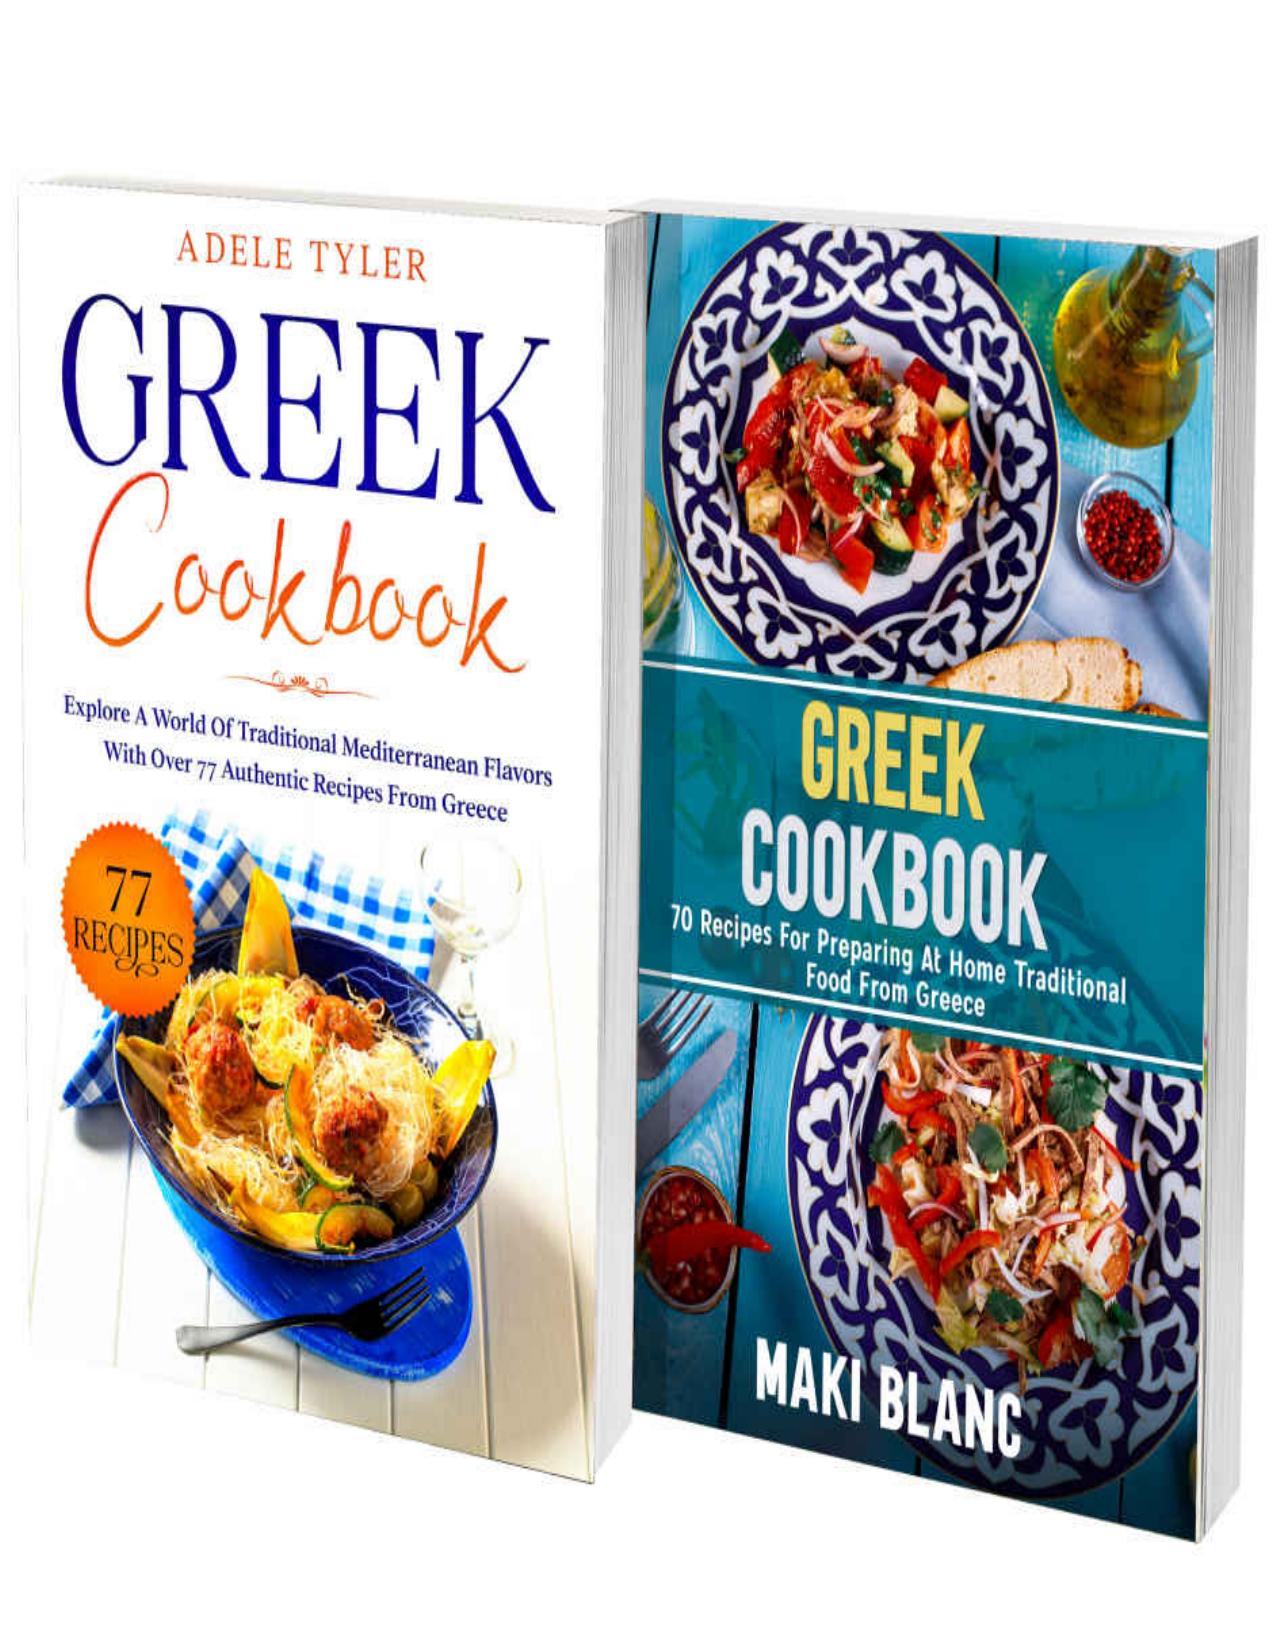 The Complete Greek Cookbook by Tyler Adele & Blanc Maki